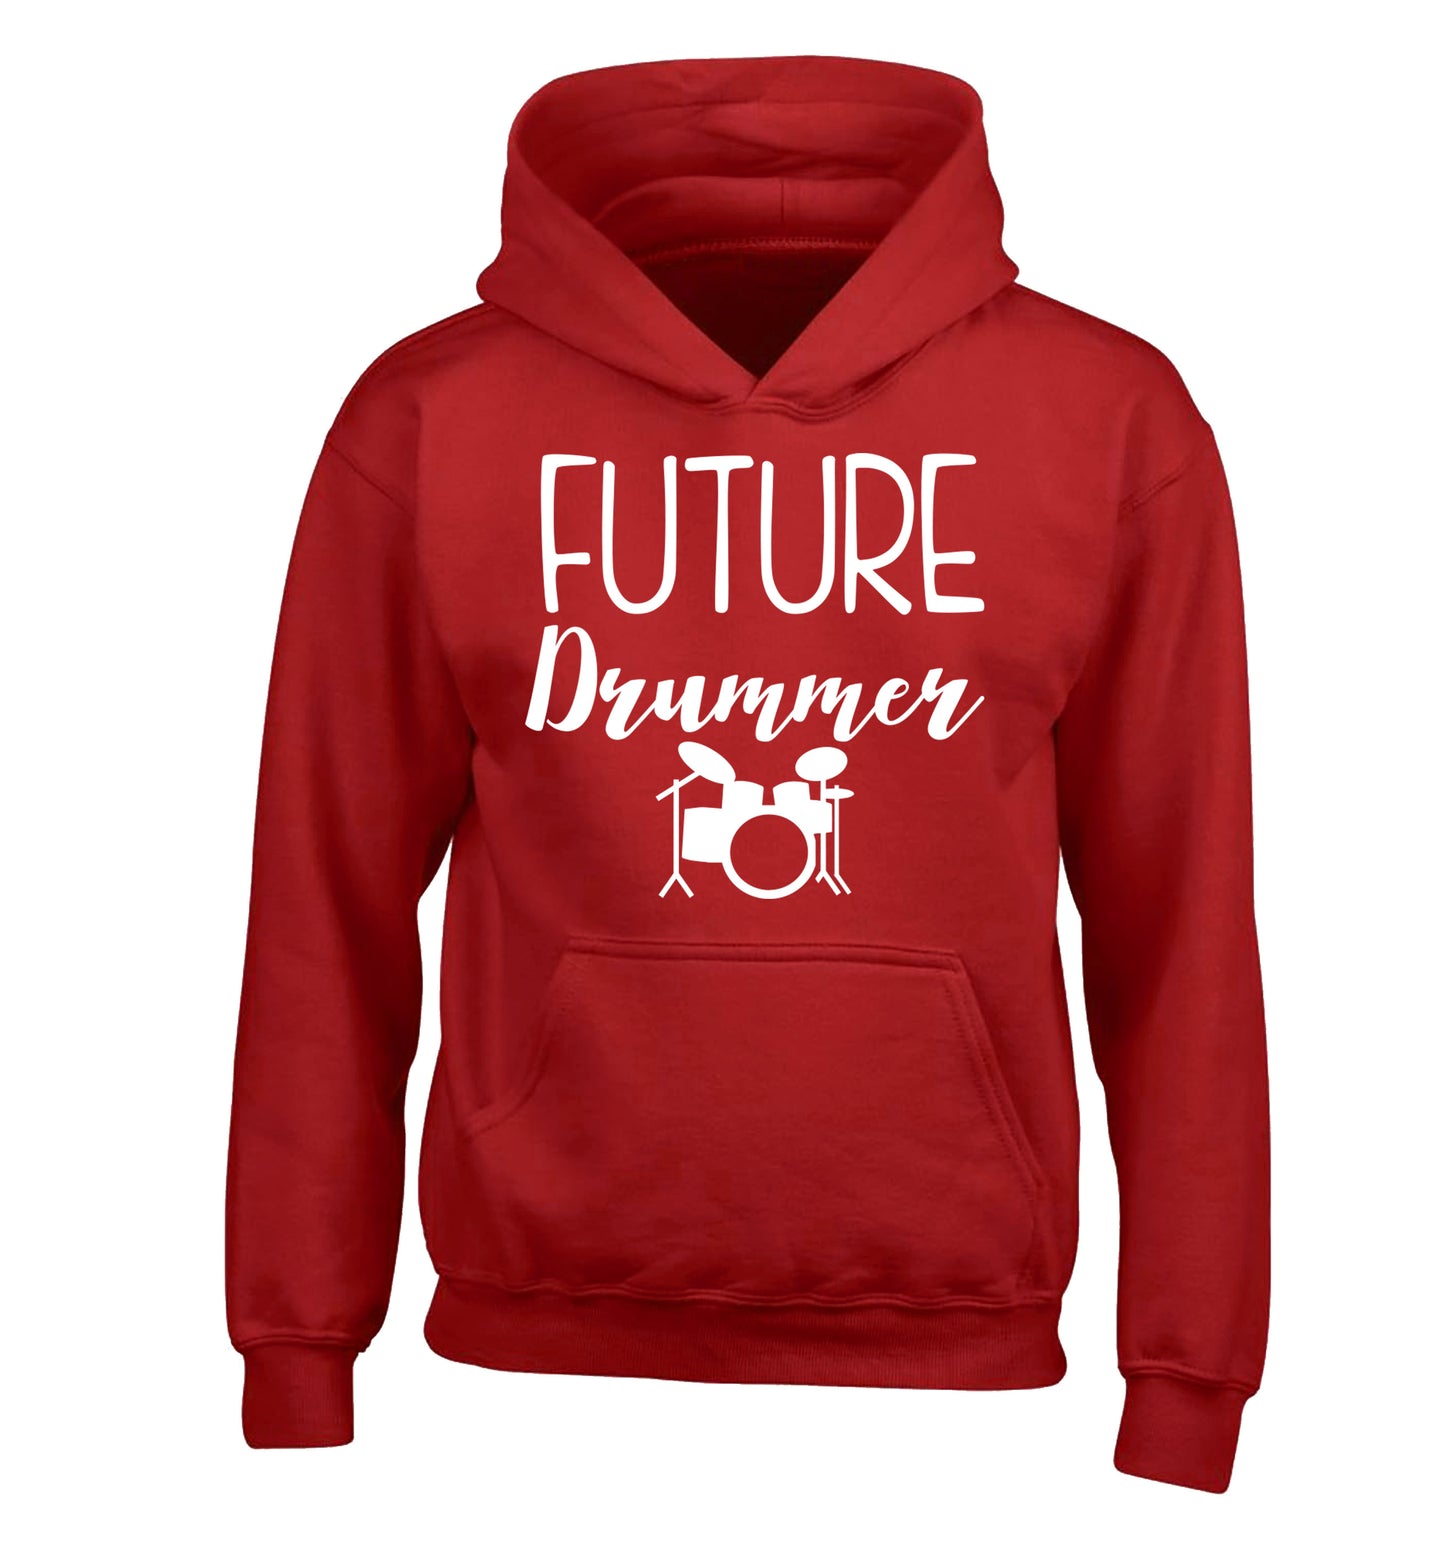 Future drummer children's red hoodie 12-14 Years